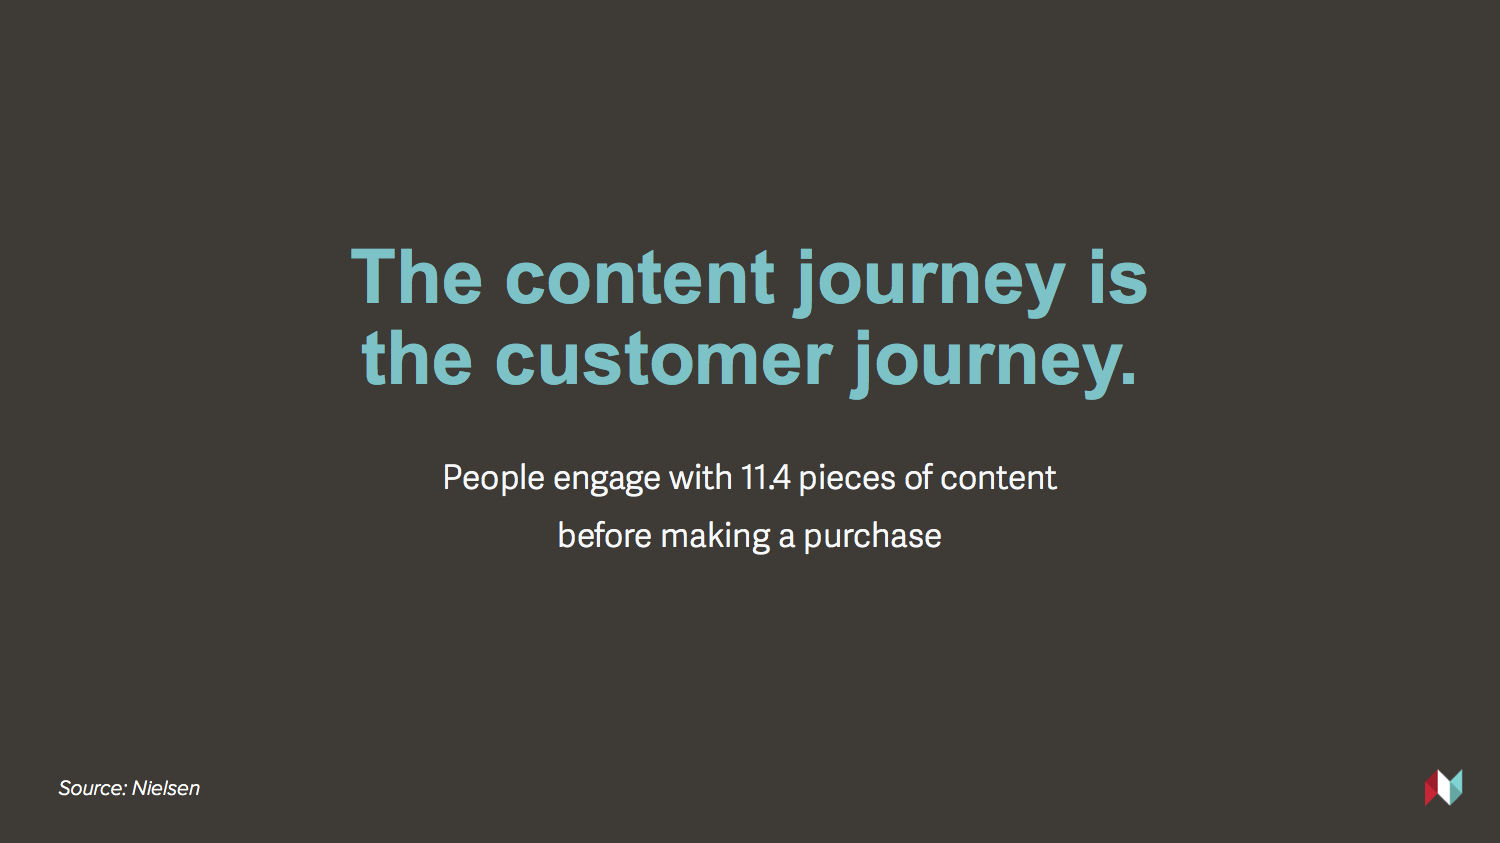 shafqat_islam_content_journey_is_customer_journey.jpg